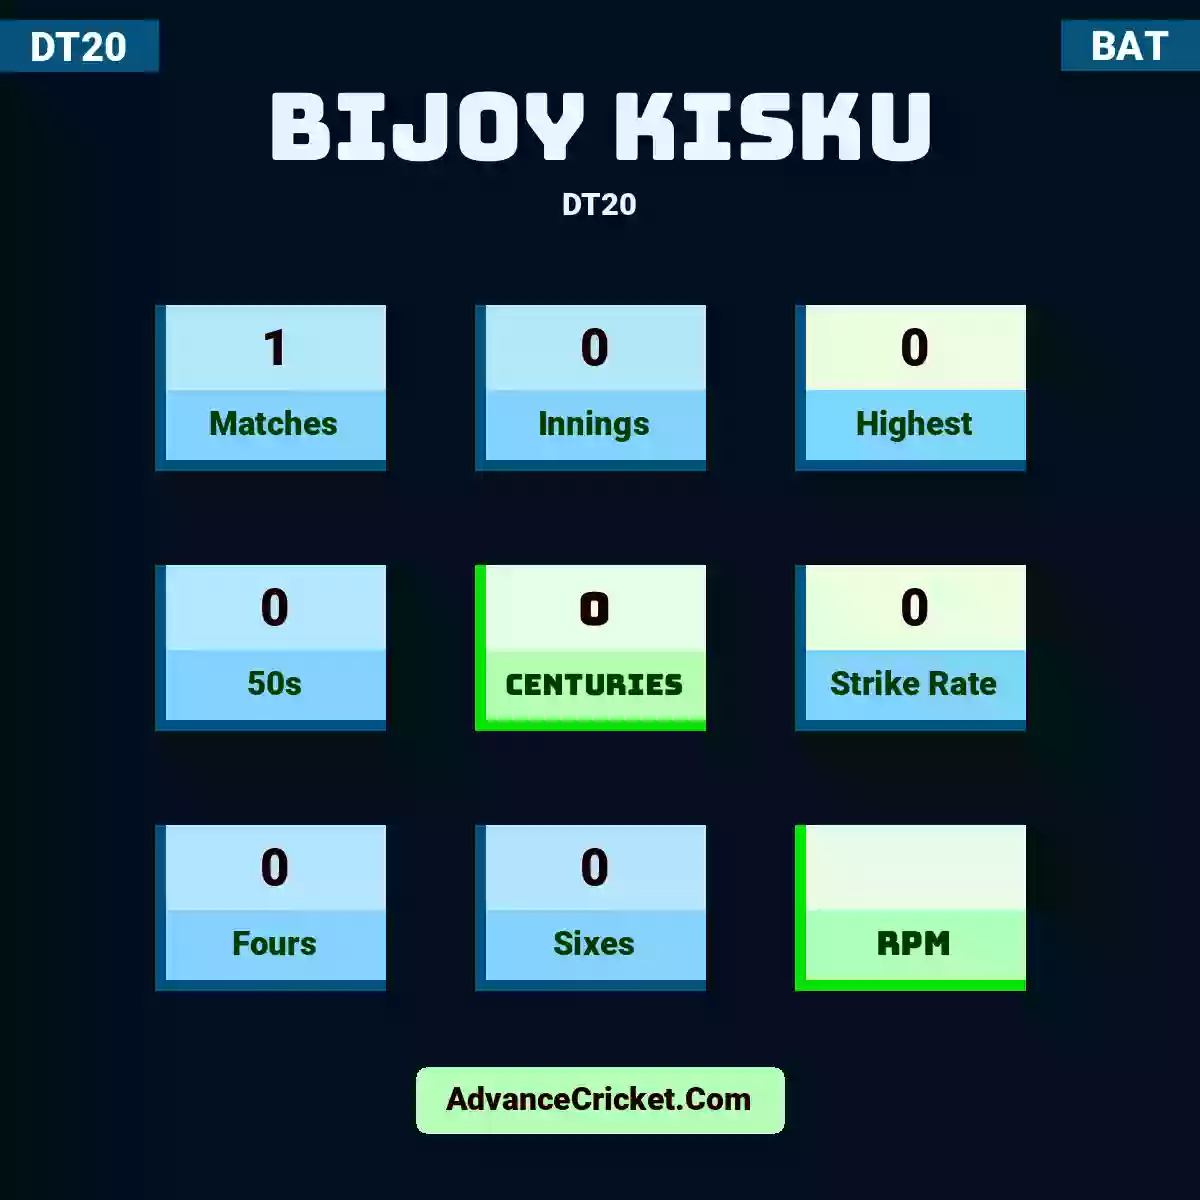 Bijoy kisku DT20 , Bijoy kisku played 1 matches, scored 0 runs as highest, 0 half-centuries, and 0 centuries, with a strike rate of 0. B.kisku hit 0 fours and 0 sixes.